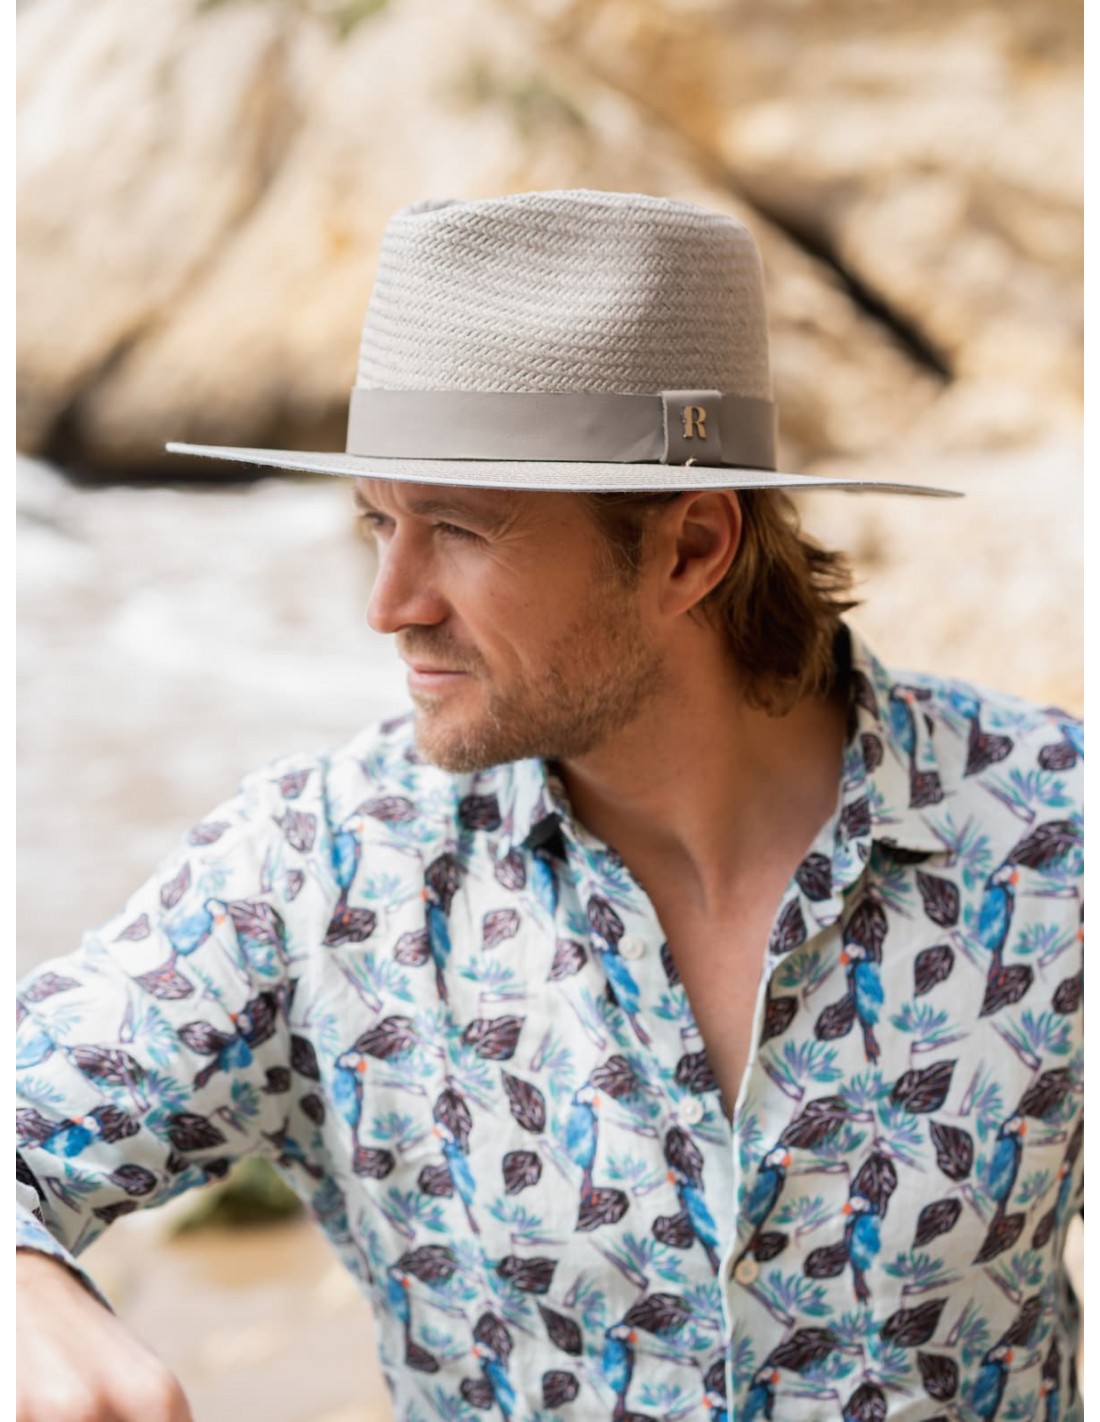 Florida Brown - Straw Hat for Men - Fedora Style - Raceu Hats Online